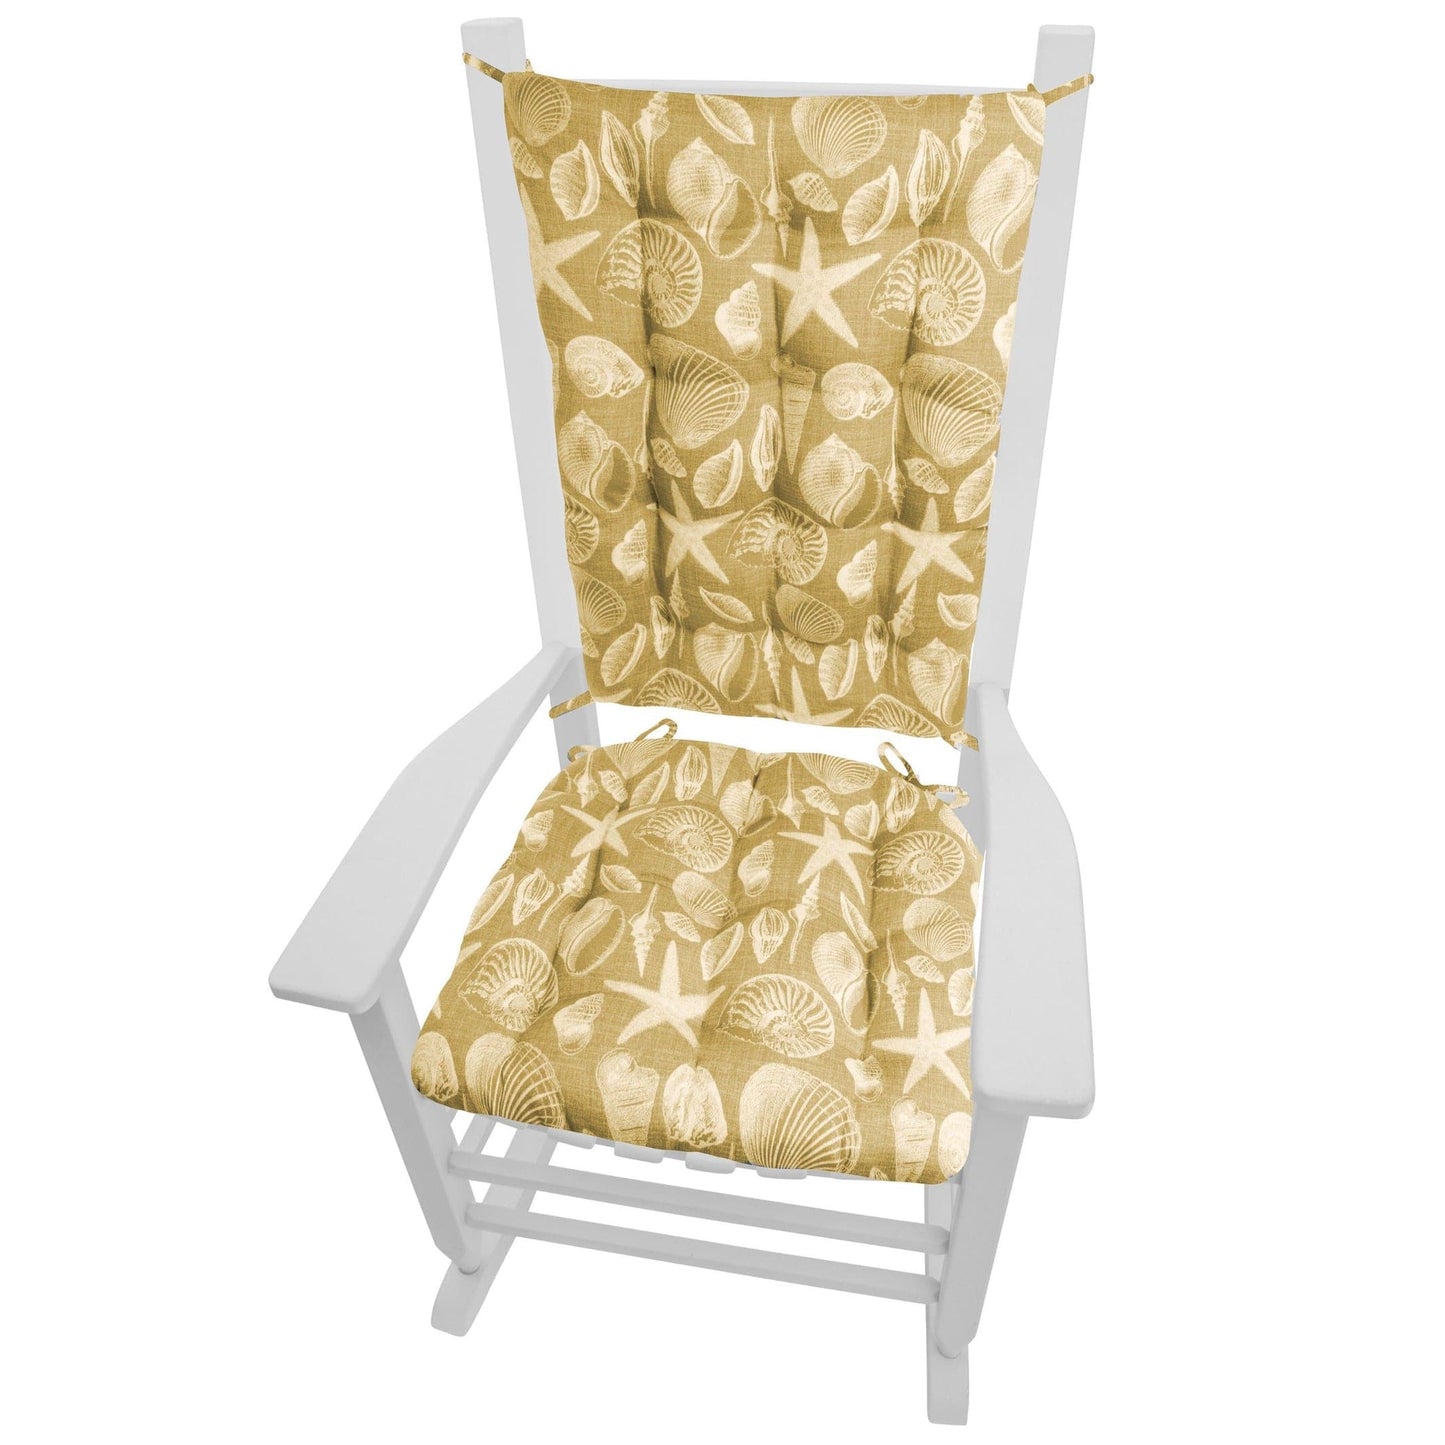 Shoreline Indoor/Outdoor Sand Rocking Chair Cushions - Barnett Home Decor - Tan - Aquatic - Oceanic - Coastal - New England